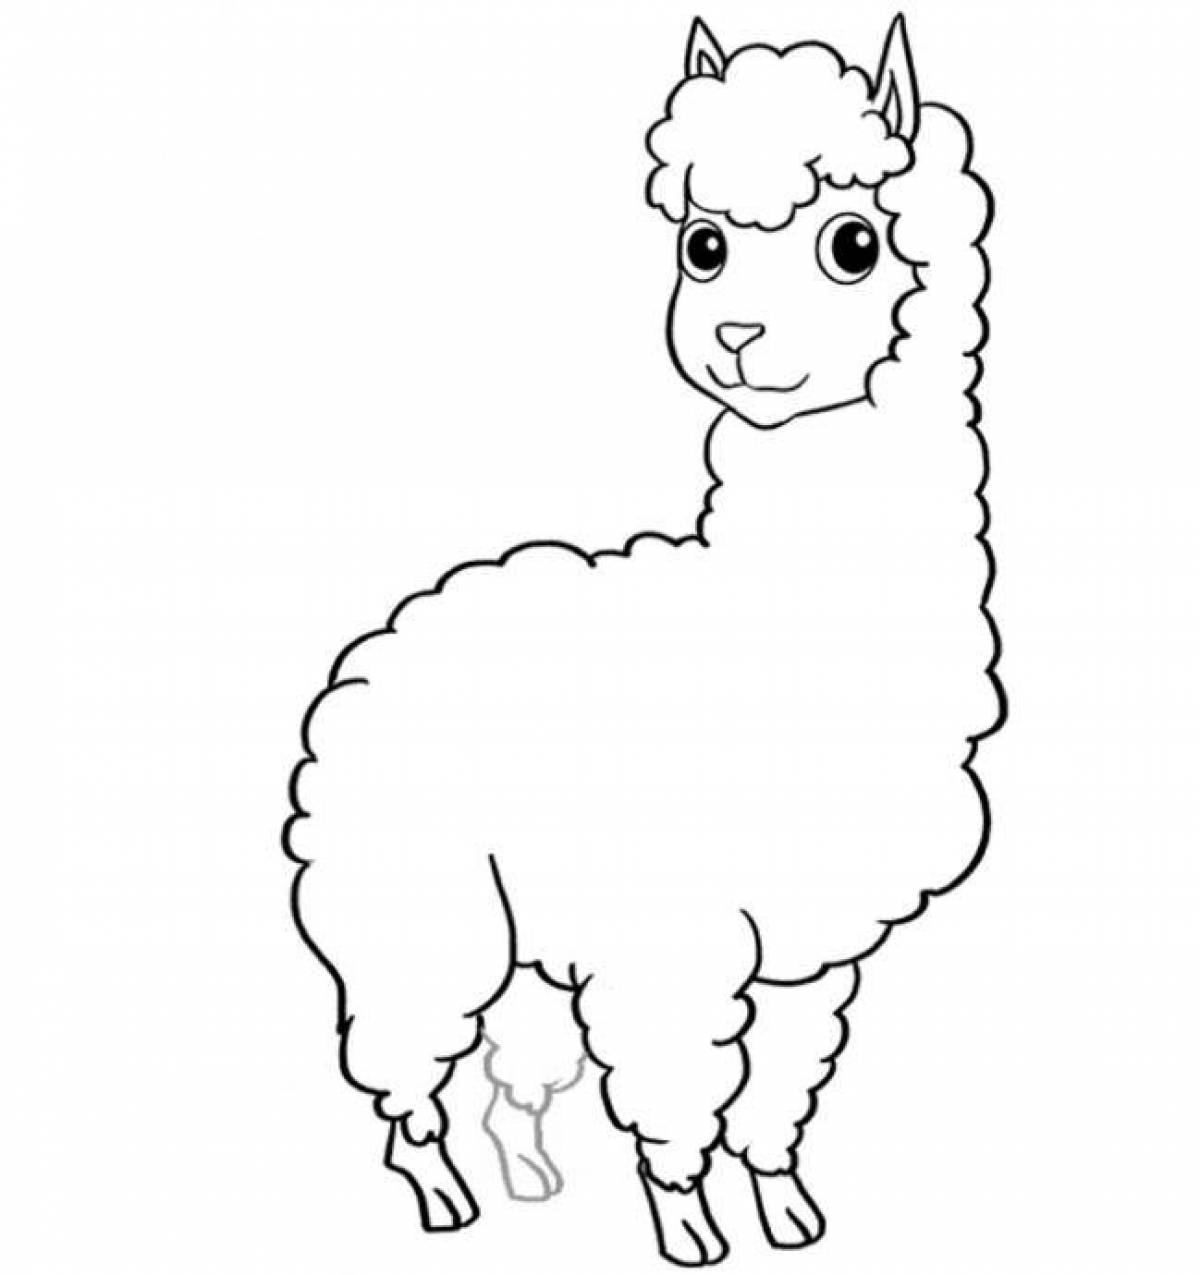 Playful llama coloring book for kids